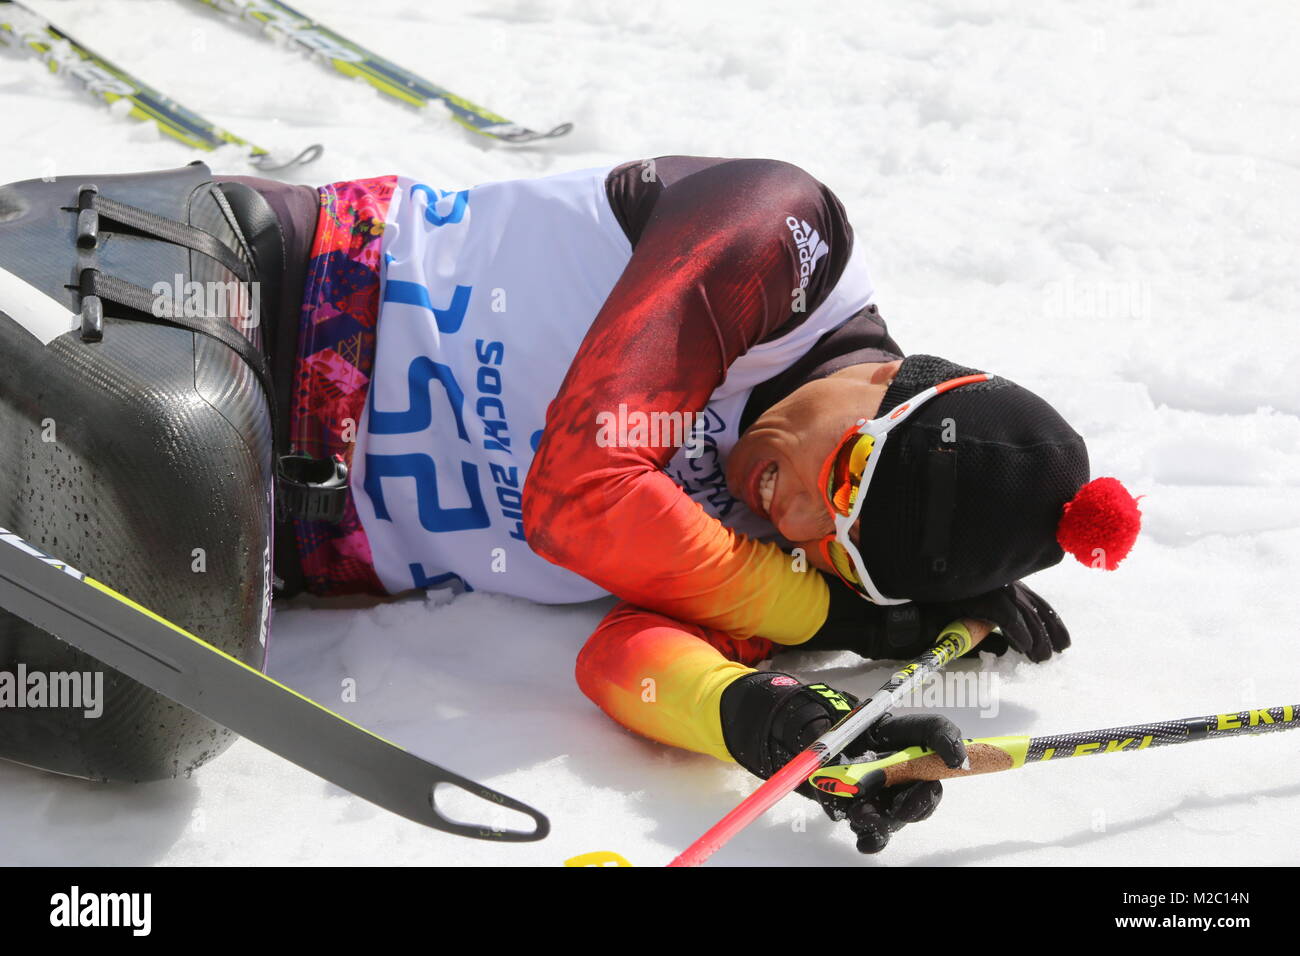 Andrea ESKAU im Ziel. Die 42-jährige hat am Sonntag ihre zweite Goldmedaille gewonnen, nachdem tr zurück als eigentllöocj Skianglauf - Cross Country 9. Jeux paralympiques 2014 / Wettkampftag Sotschi Jeux paralympiques d'hiver de Sotchi 2014 Banque D'Images